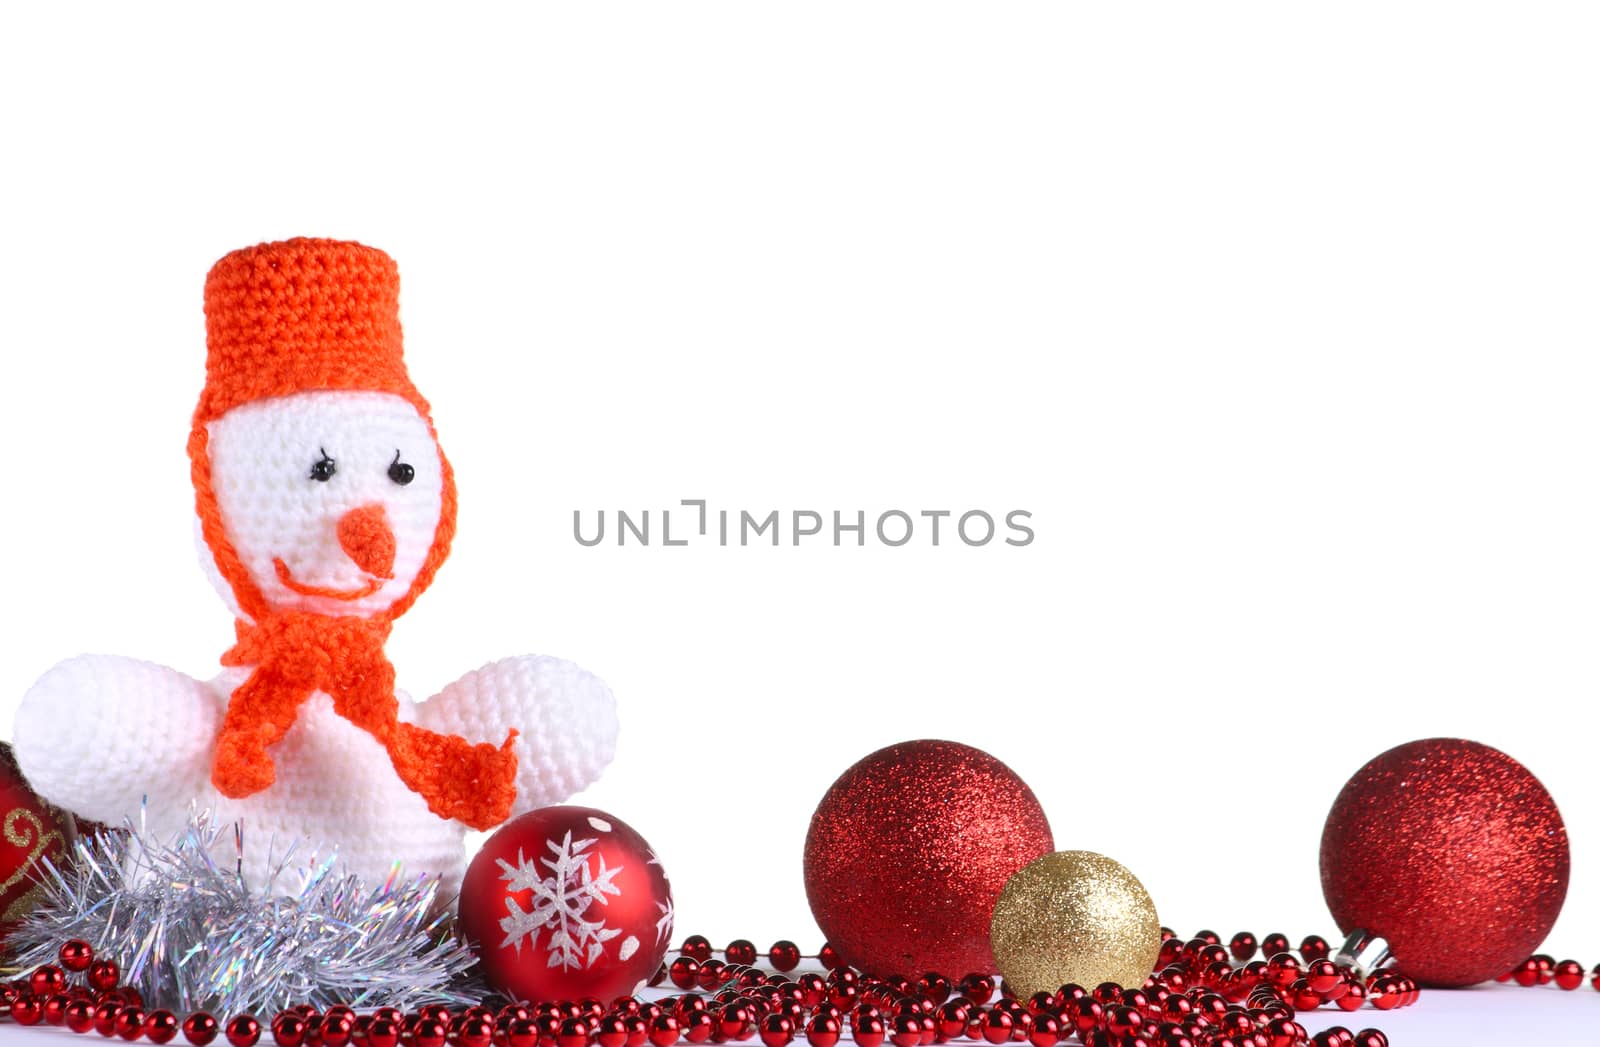 White snowman at the white background by dedmorozz